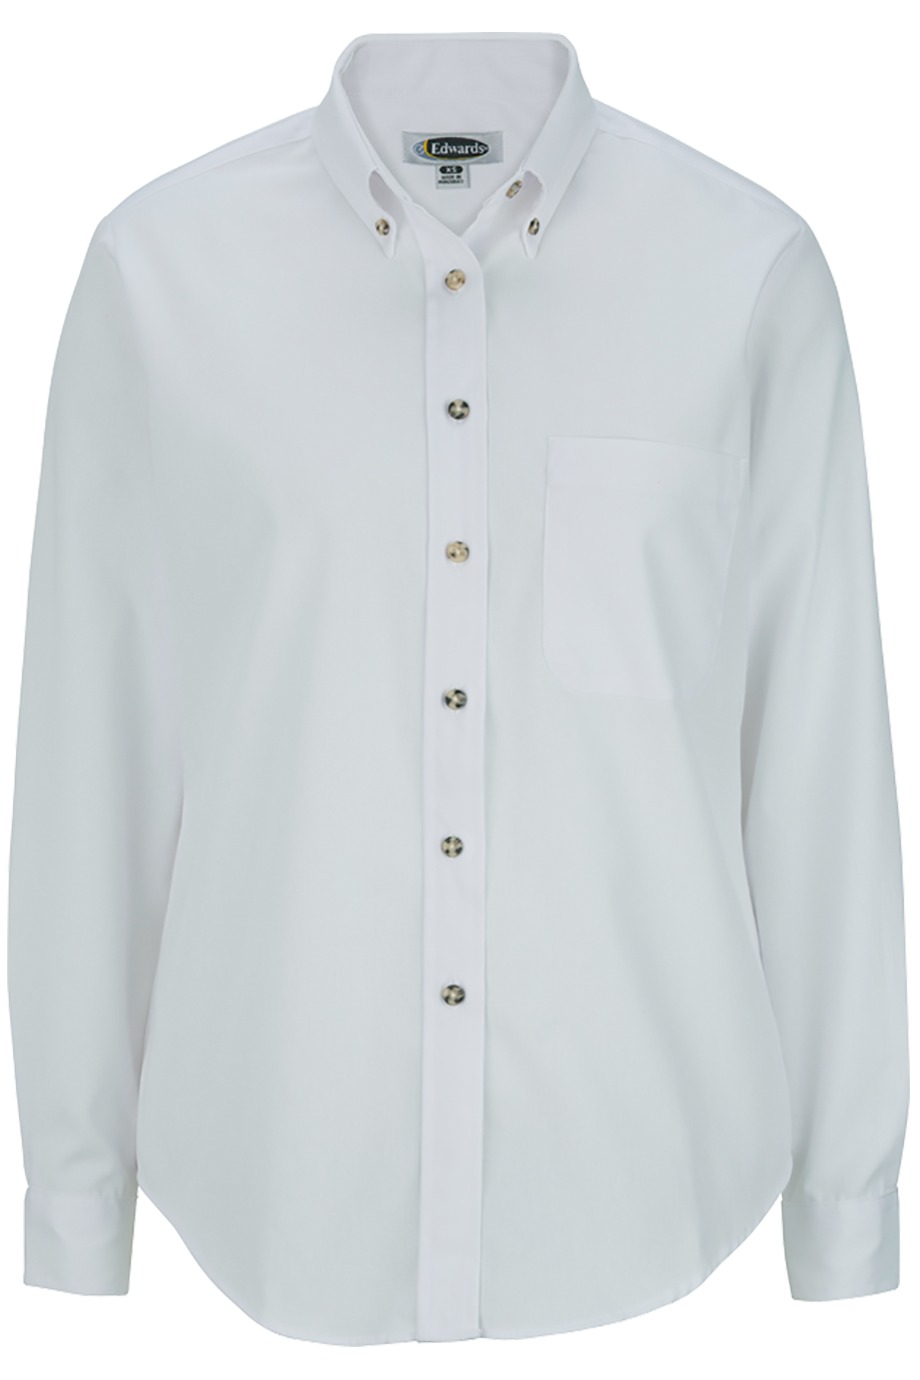 Edwards Garment 5280 - Women's Easy Care Long Sleeve Poplin Shirt